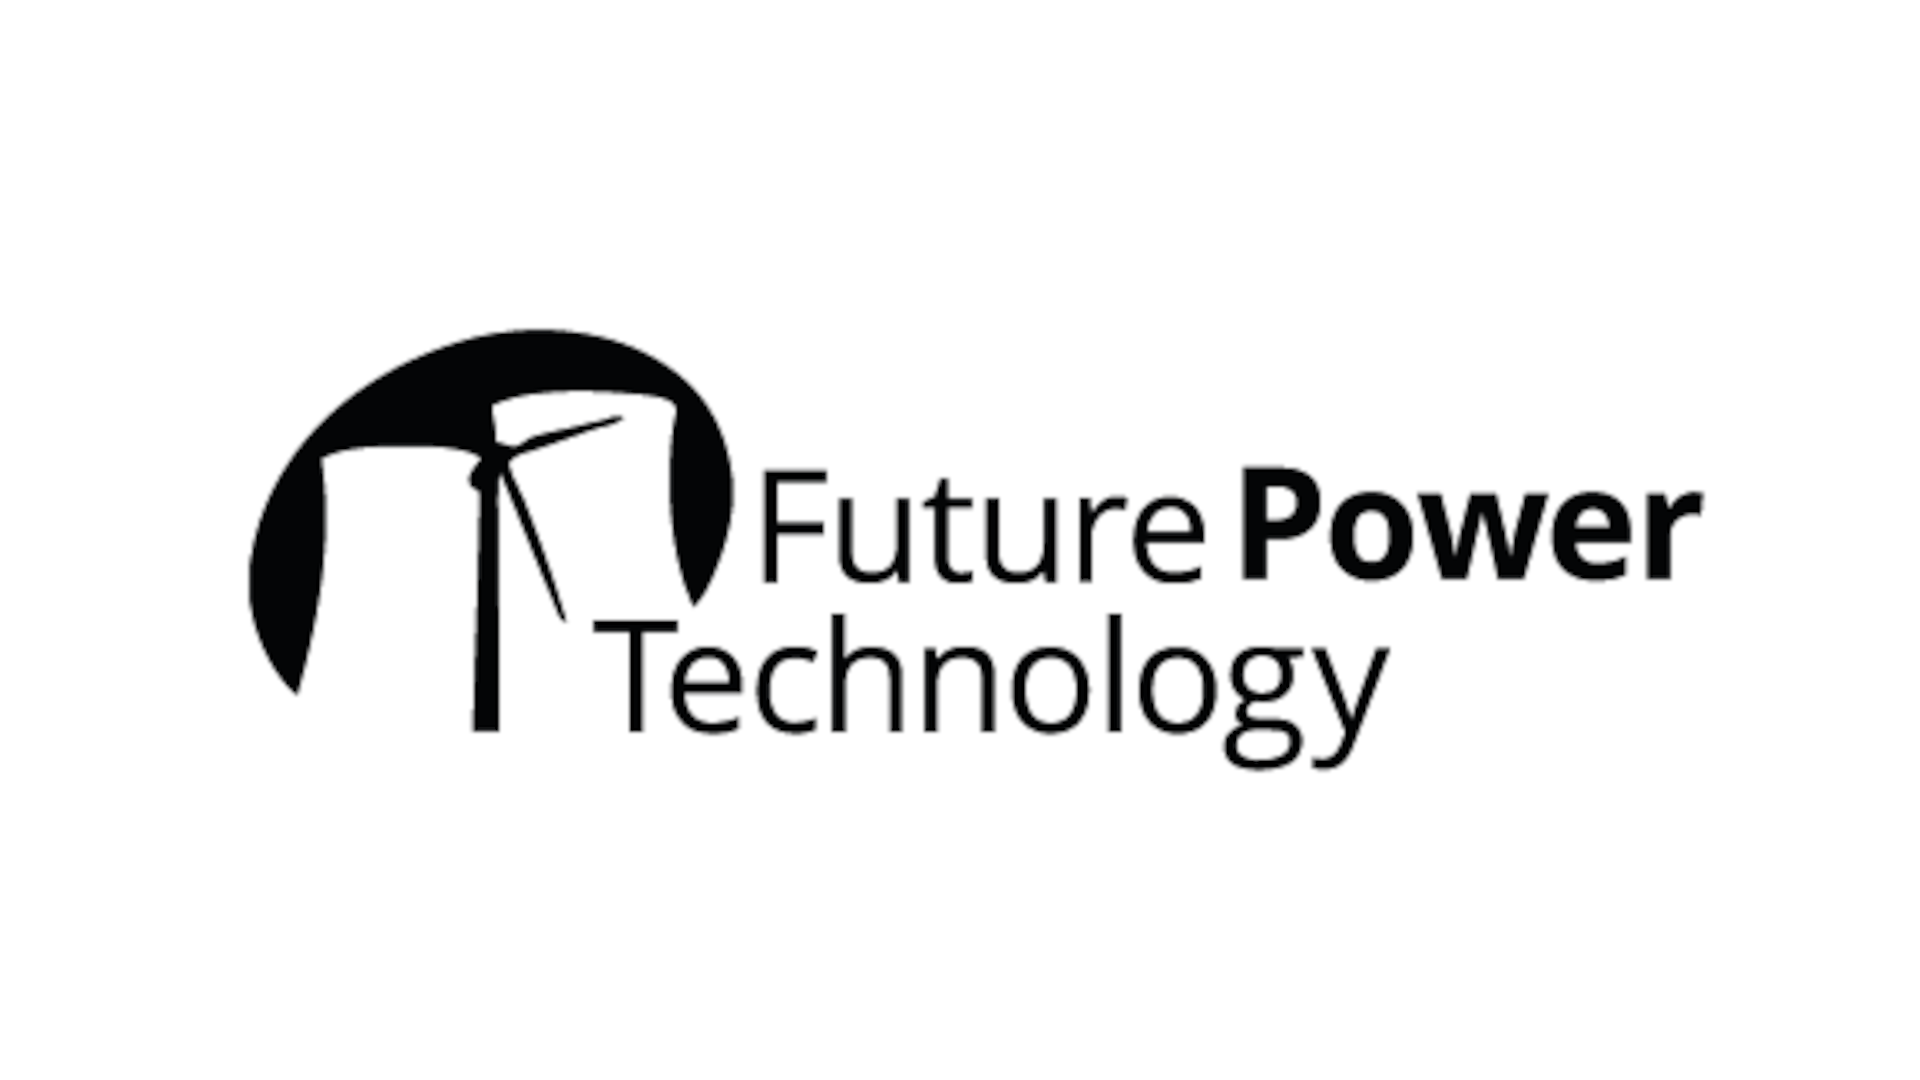 Future Power Technology, February 2021 image